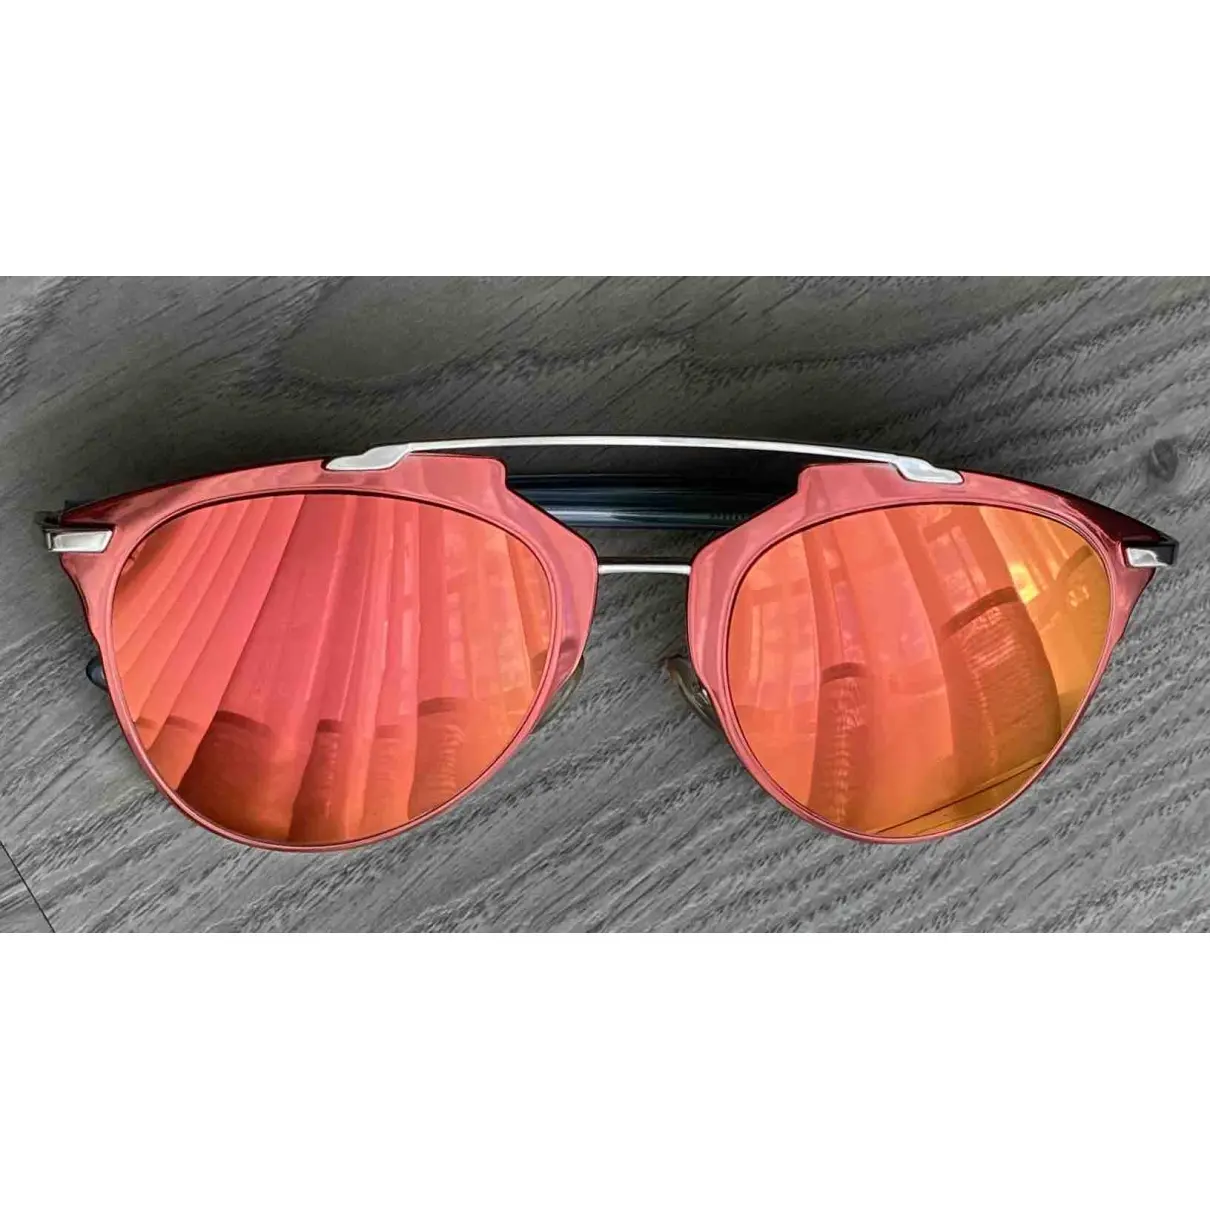 Buy Dior Reflected aviator sunglasses online